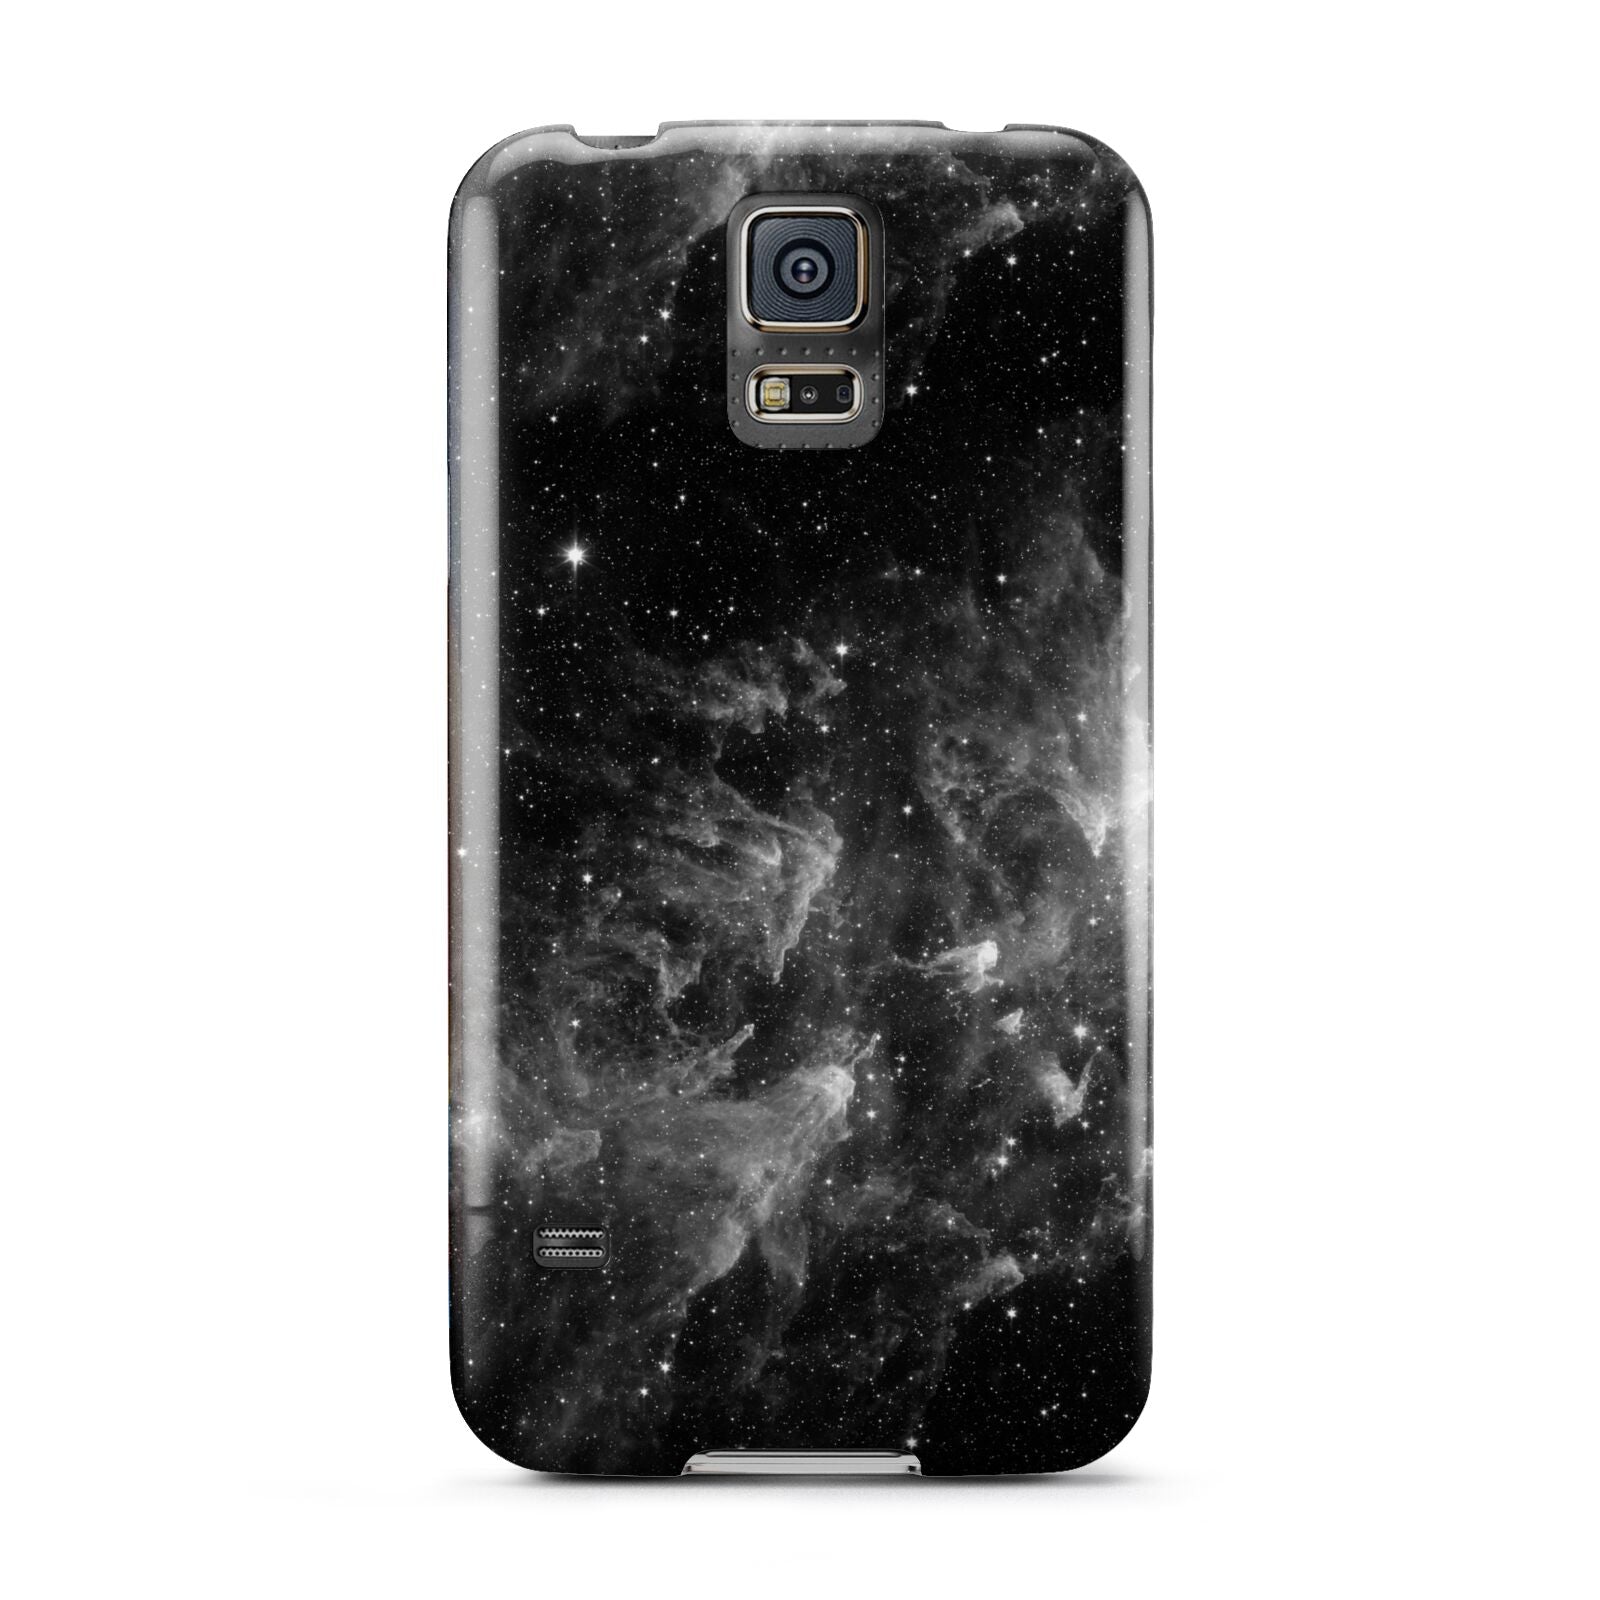 Black Space Samsung Galaxy S5 Case